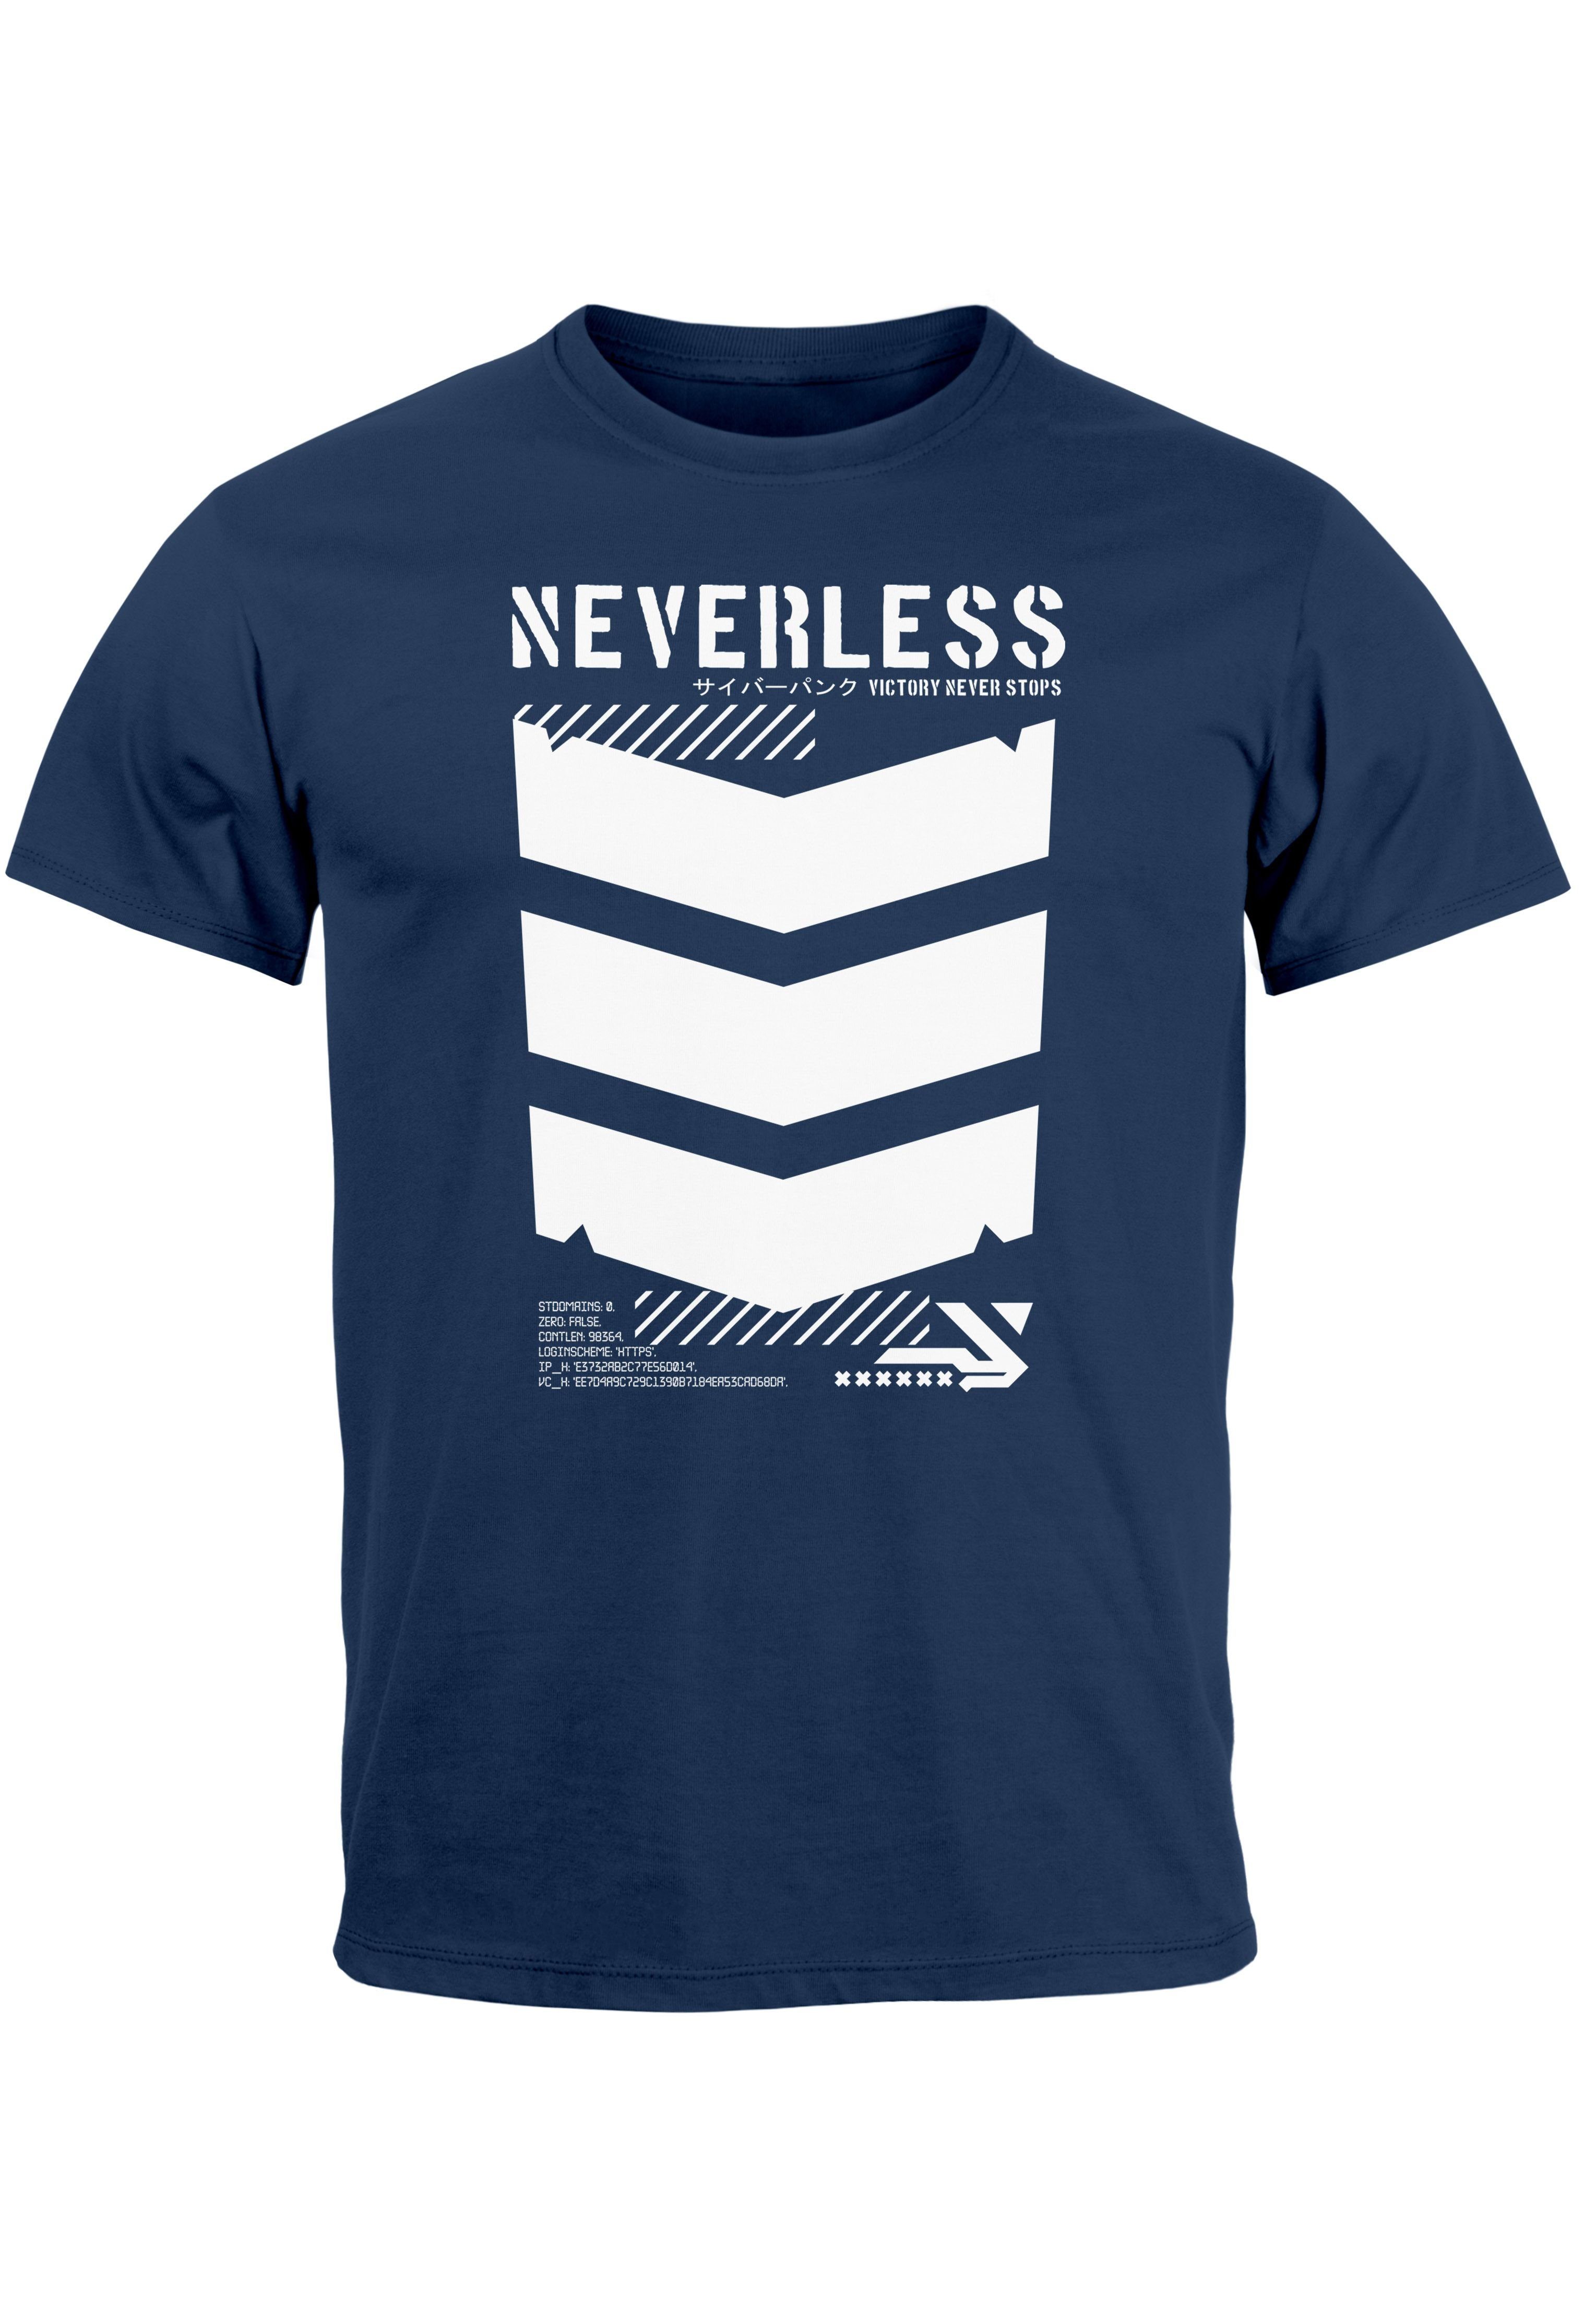 Neverless Print-Shirt Fas Herren Japanese mit Military T-Shirt Trend Techwear Streetstyle Motive Print navy